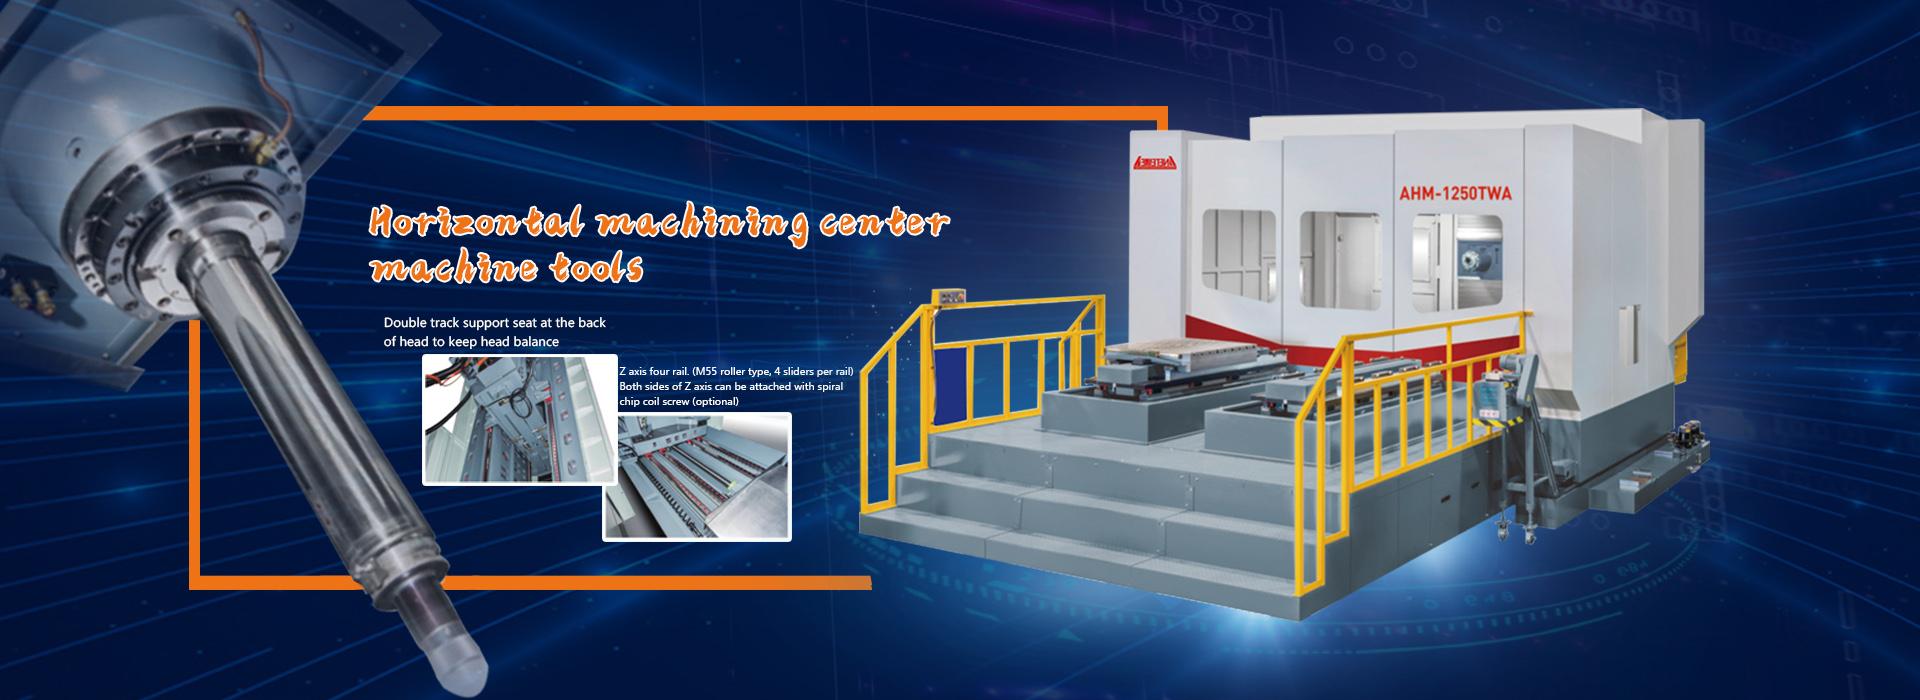 Gantry machining center, vertical machining center, horizontal machining center, five-axis machining center